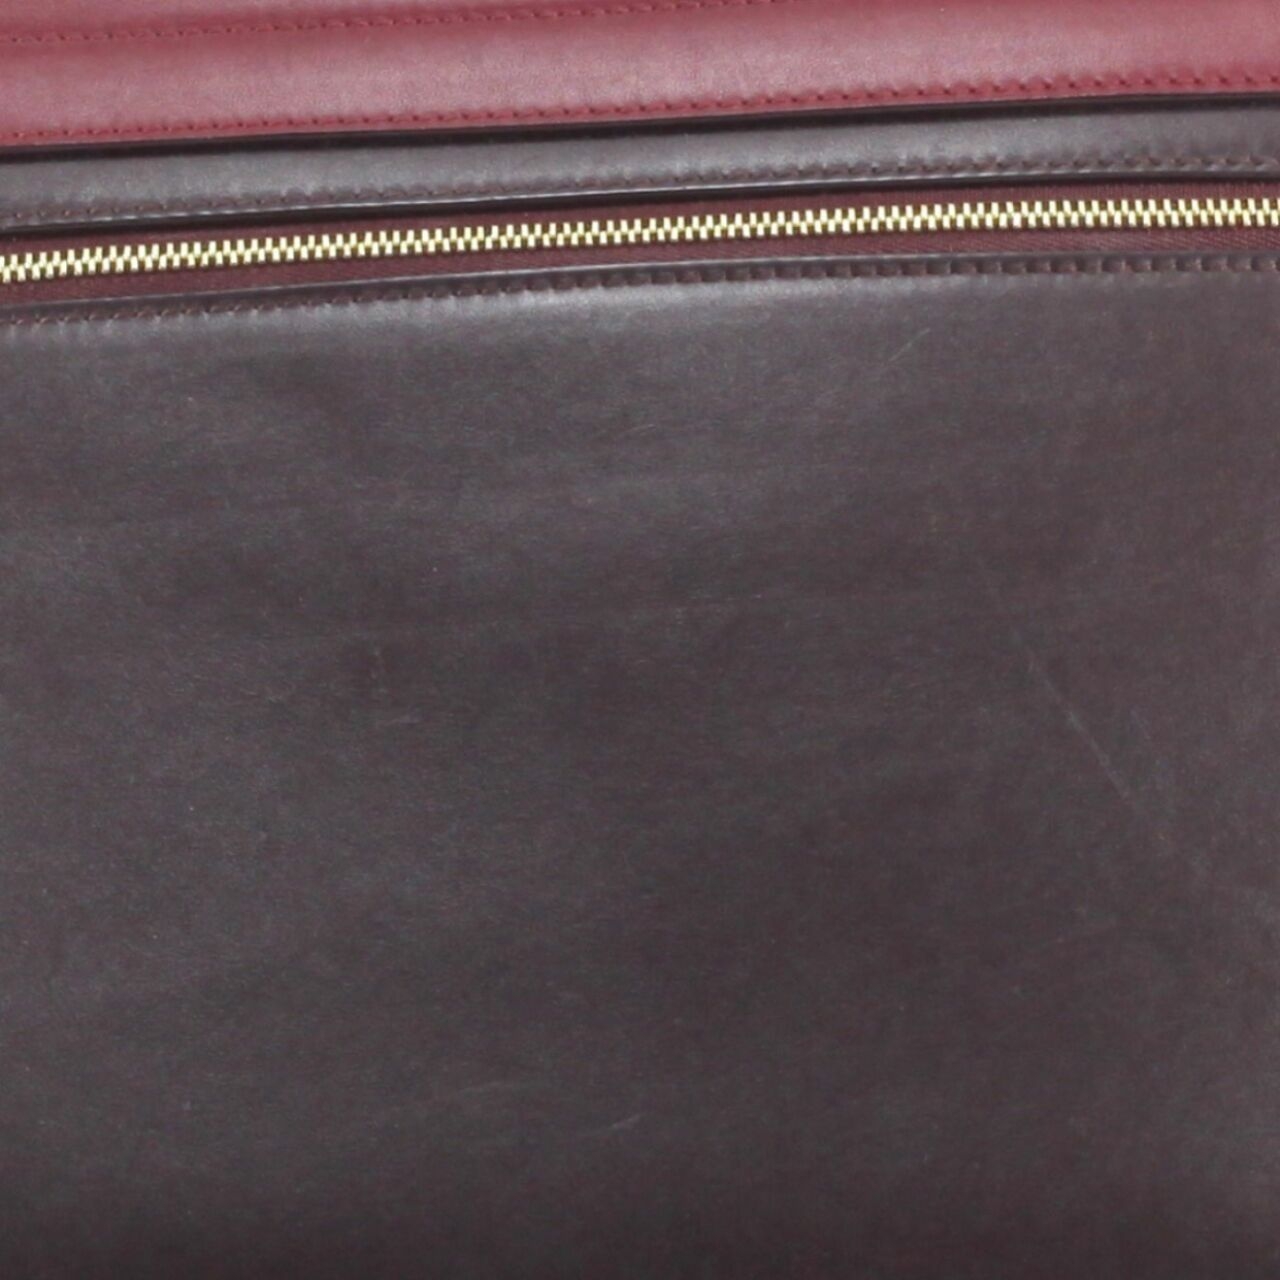 Celine Trapeze Medium All Leather Handbag in Tricolor